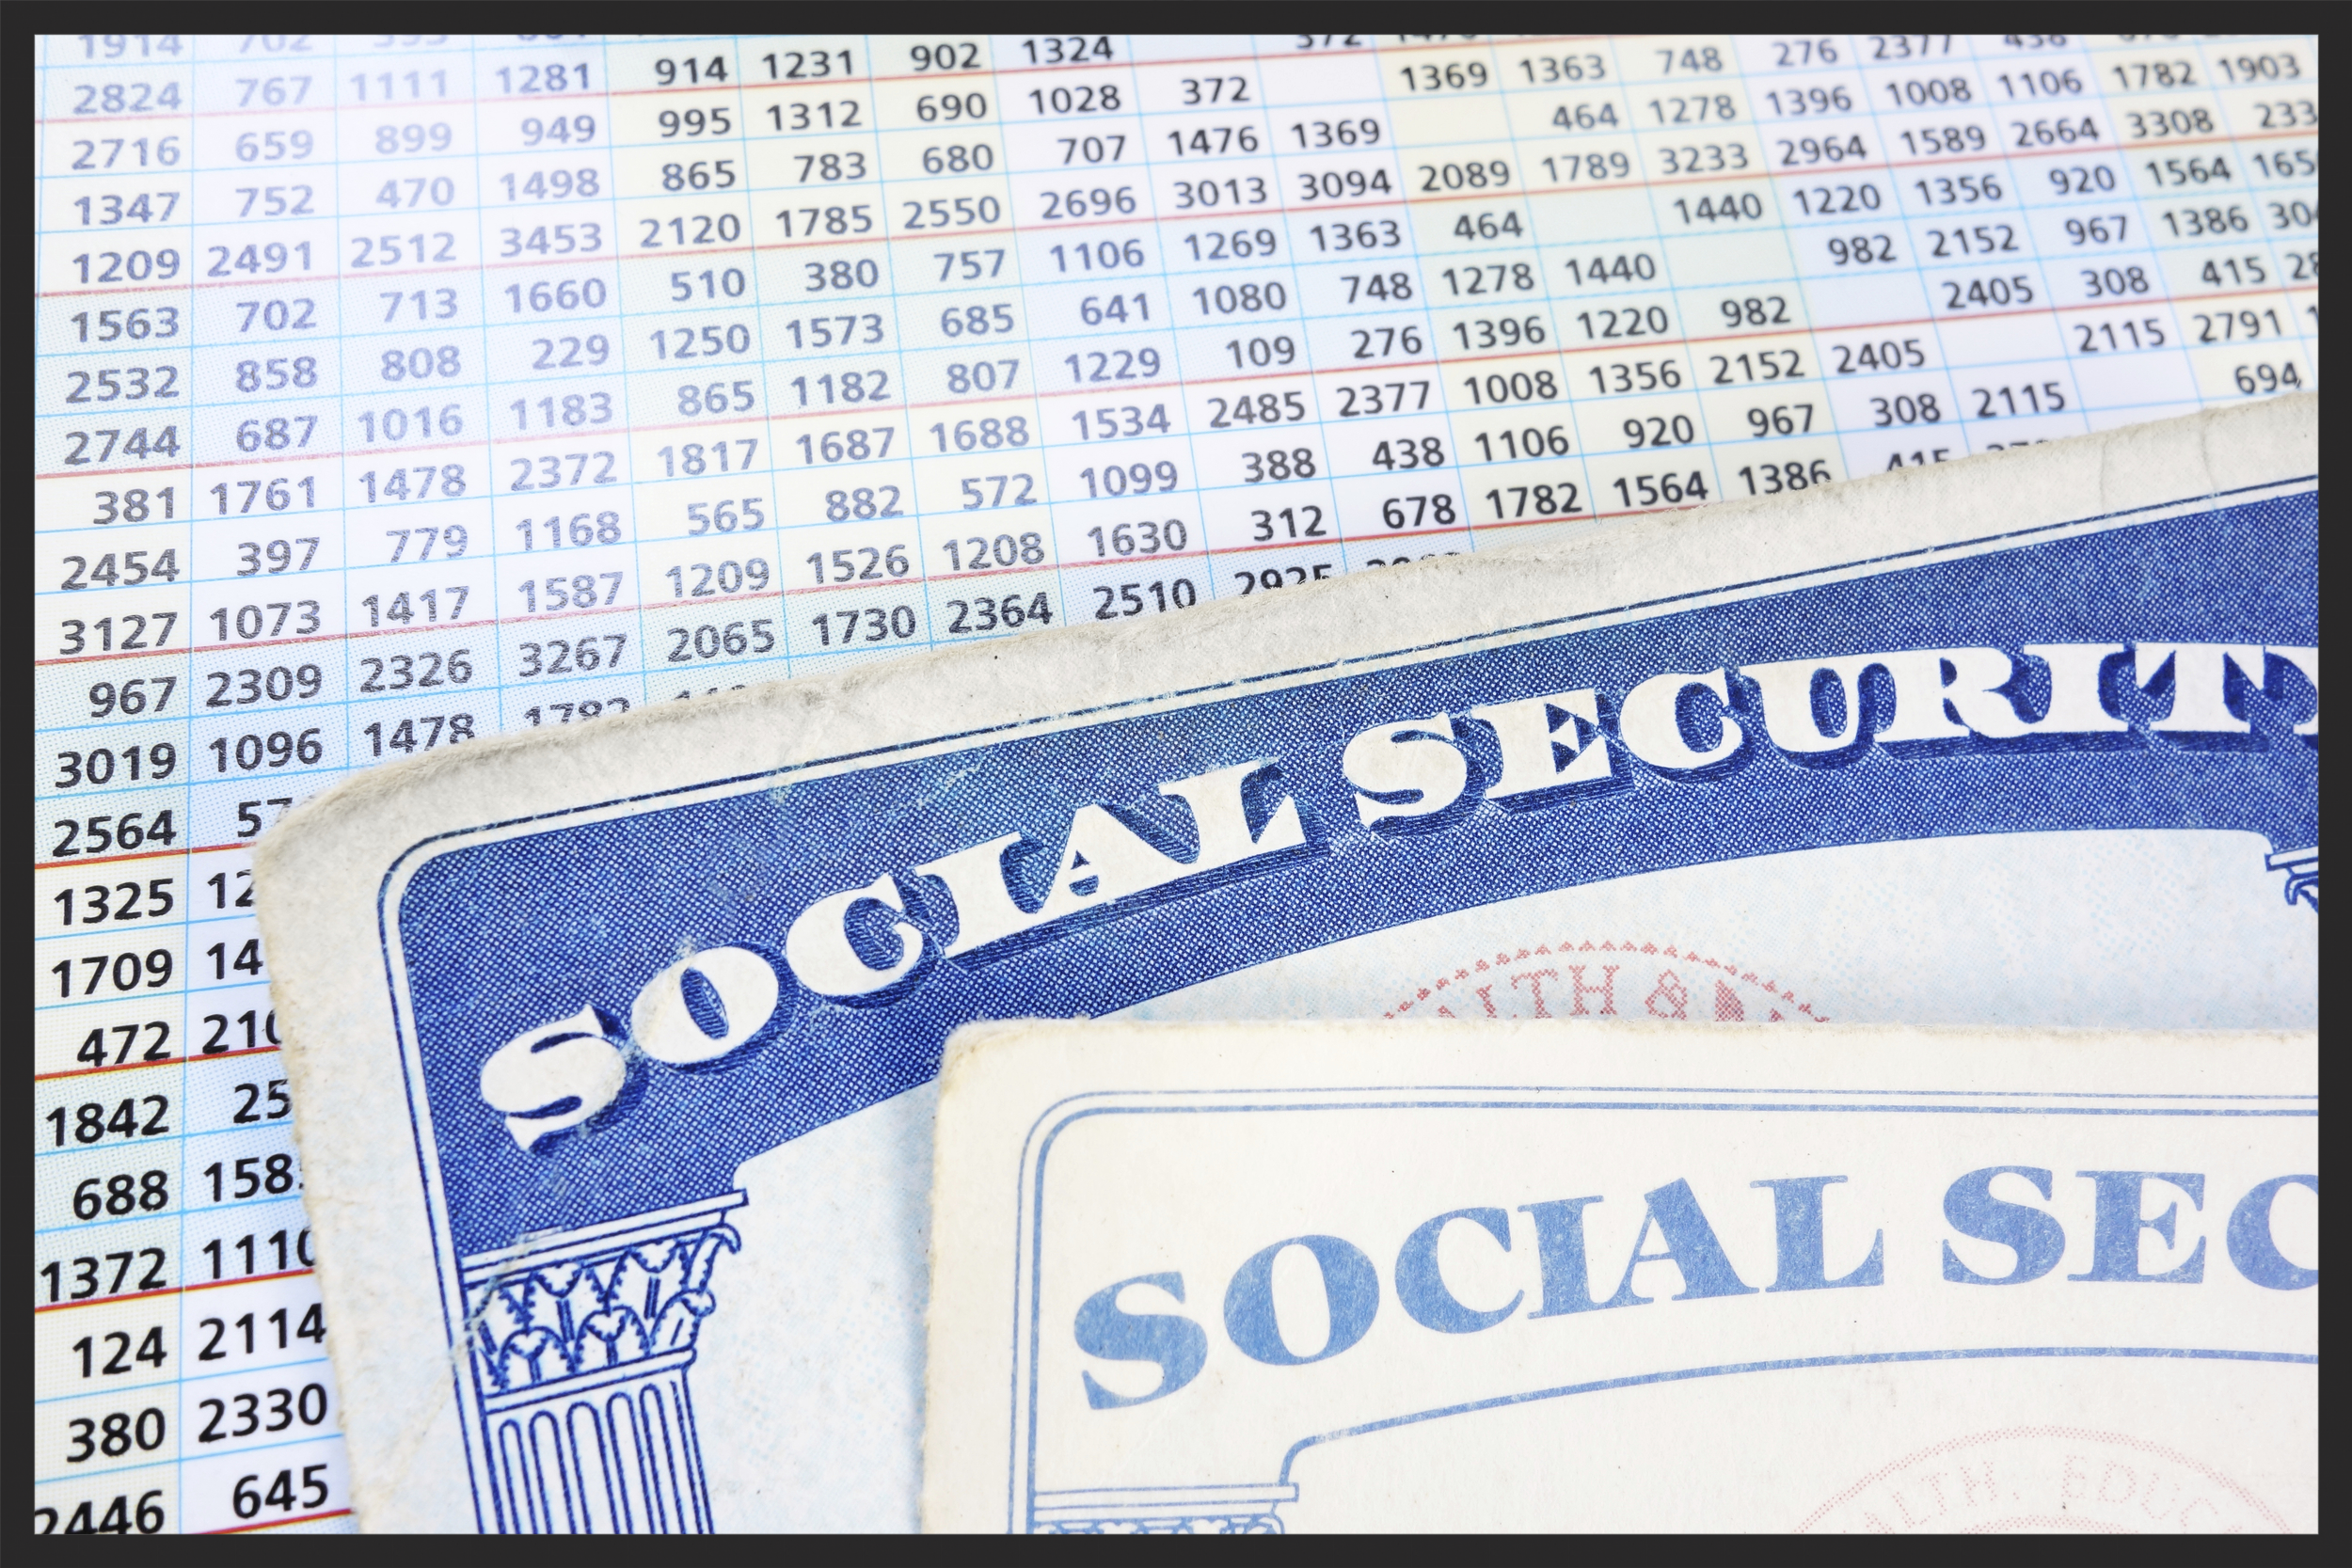 social security cards